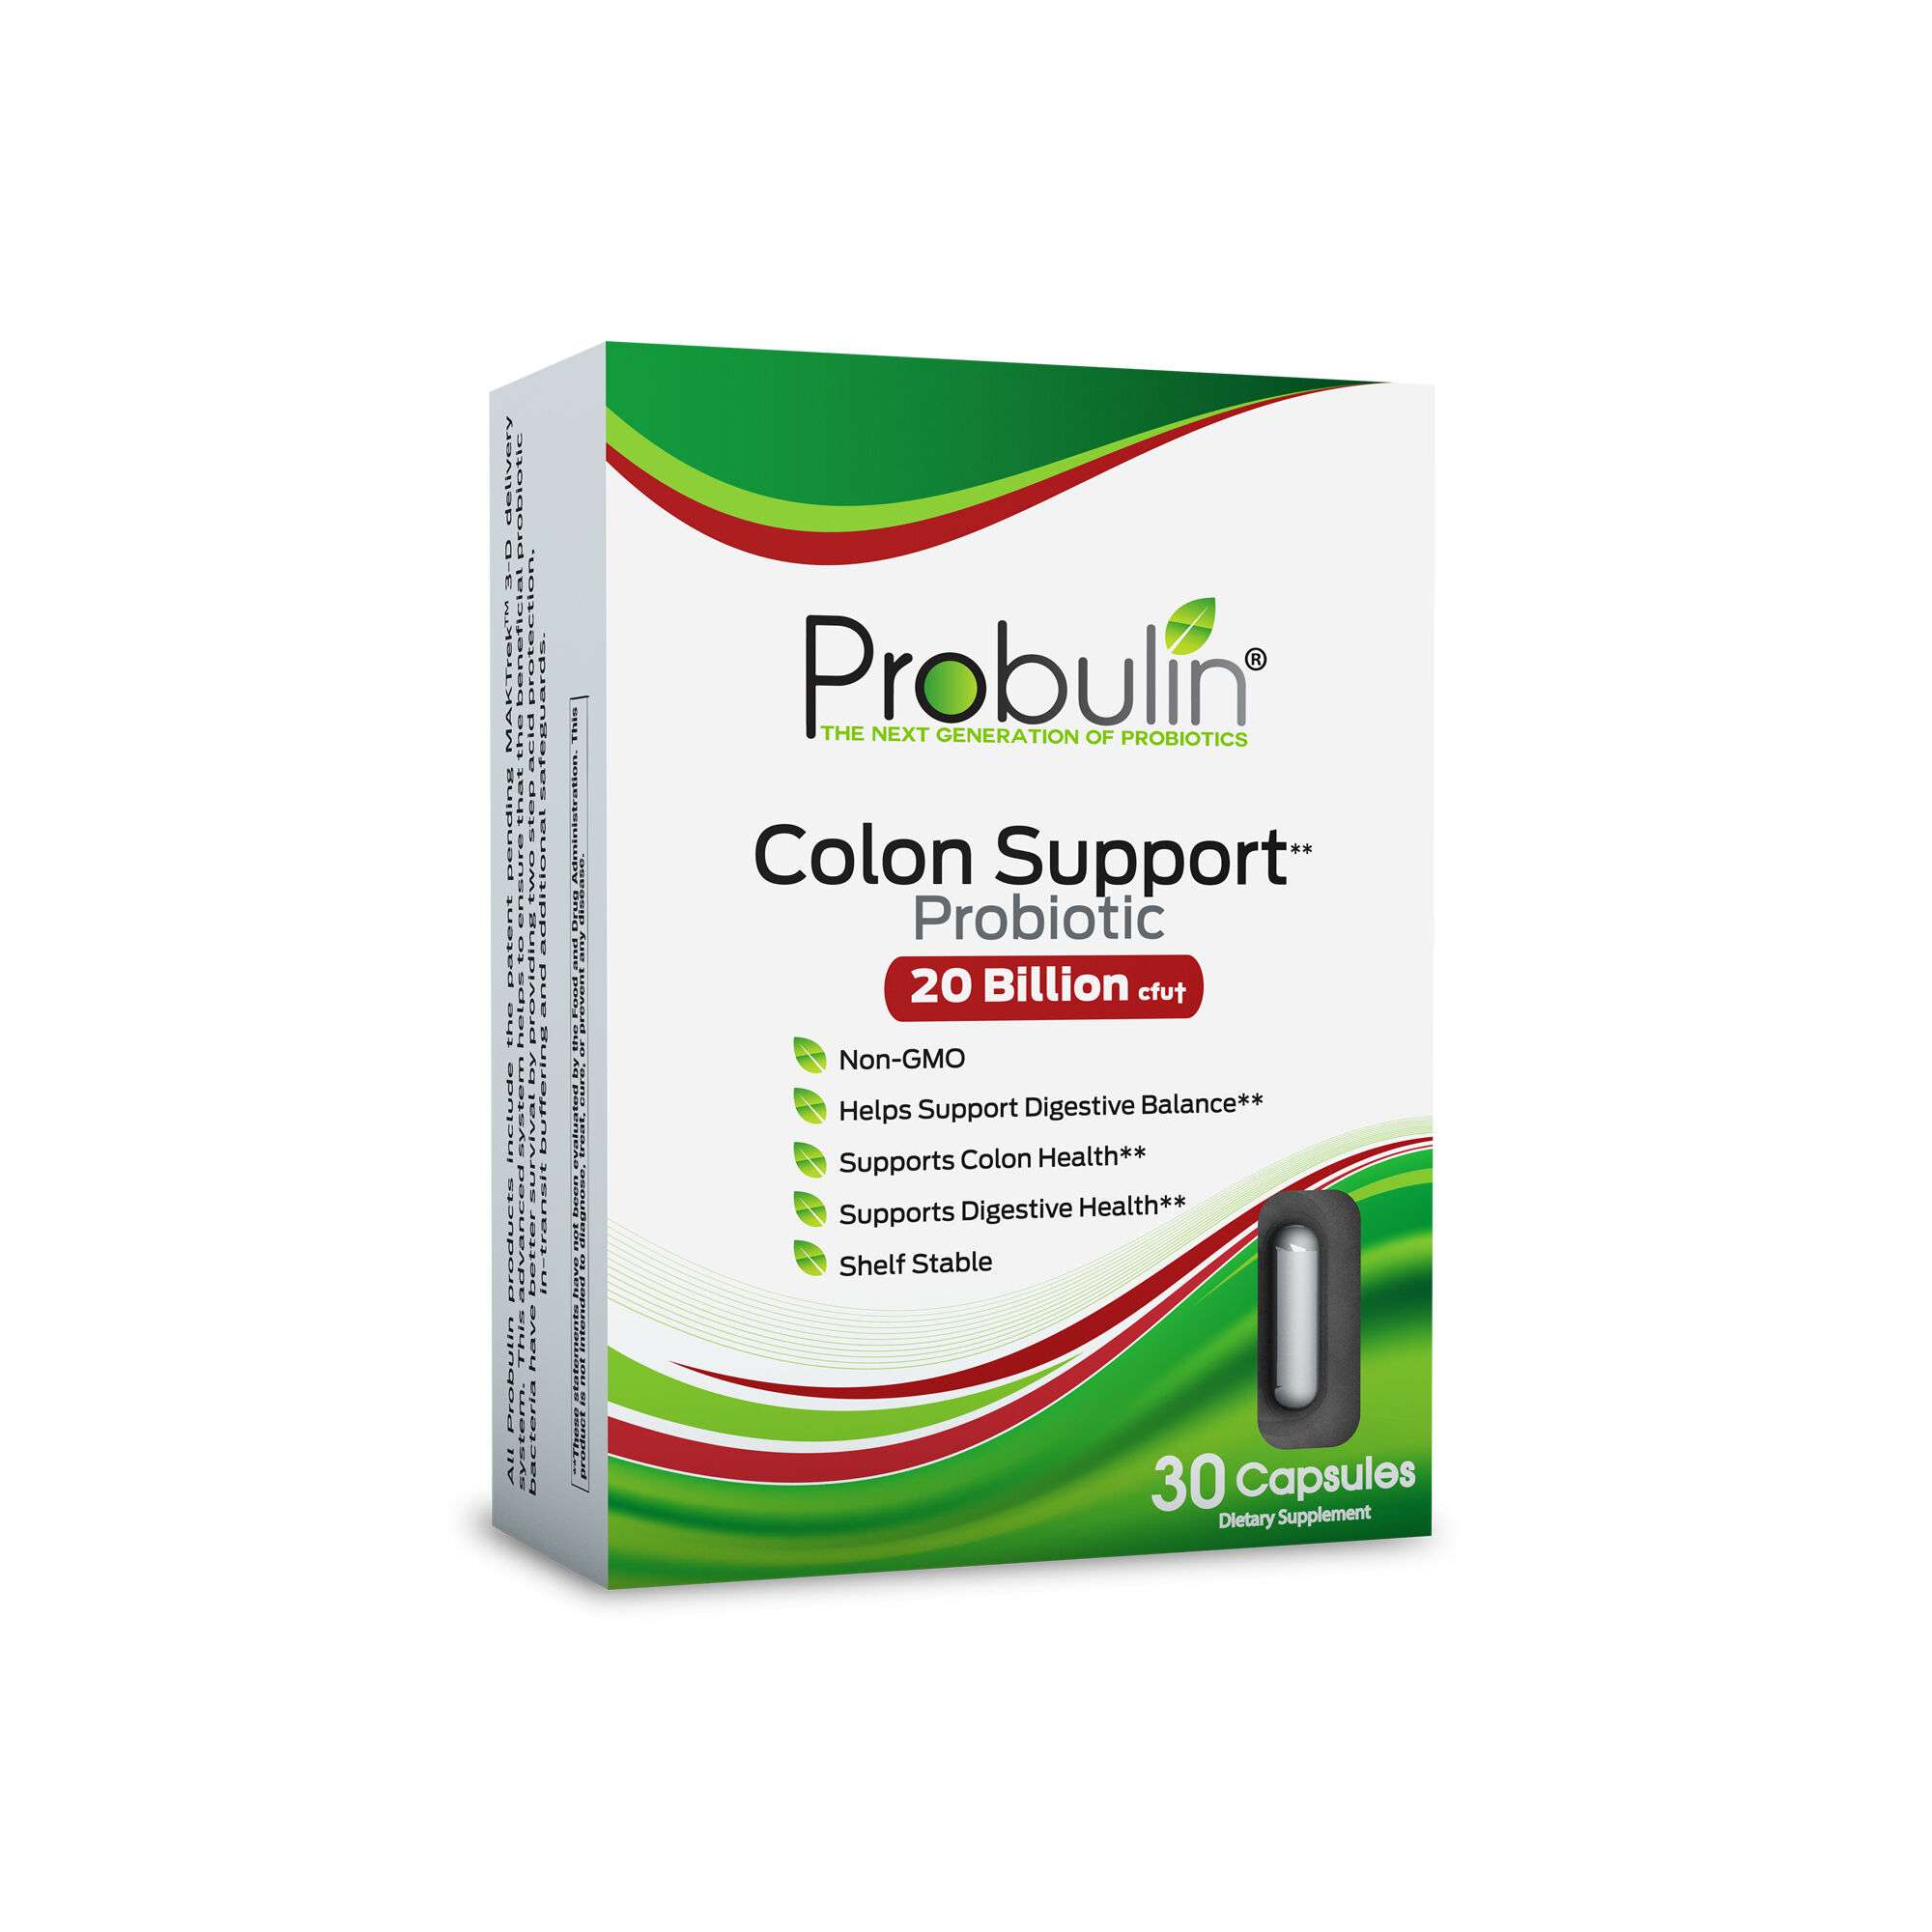 ProbulinÂ® Colon Support Probiotic